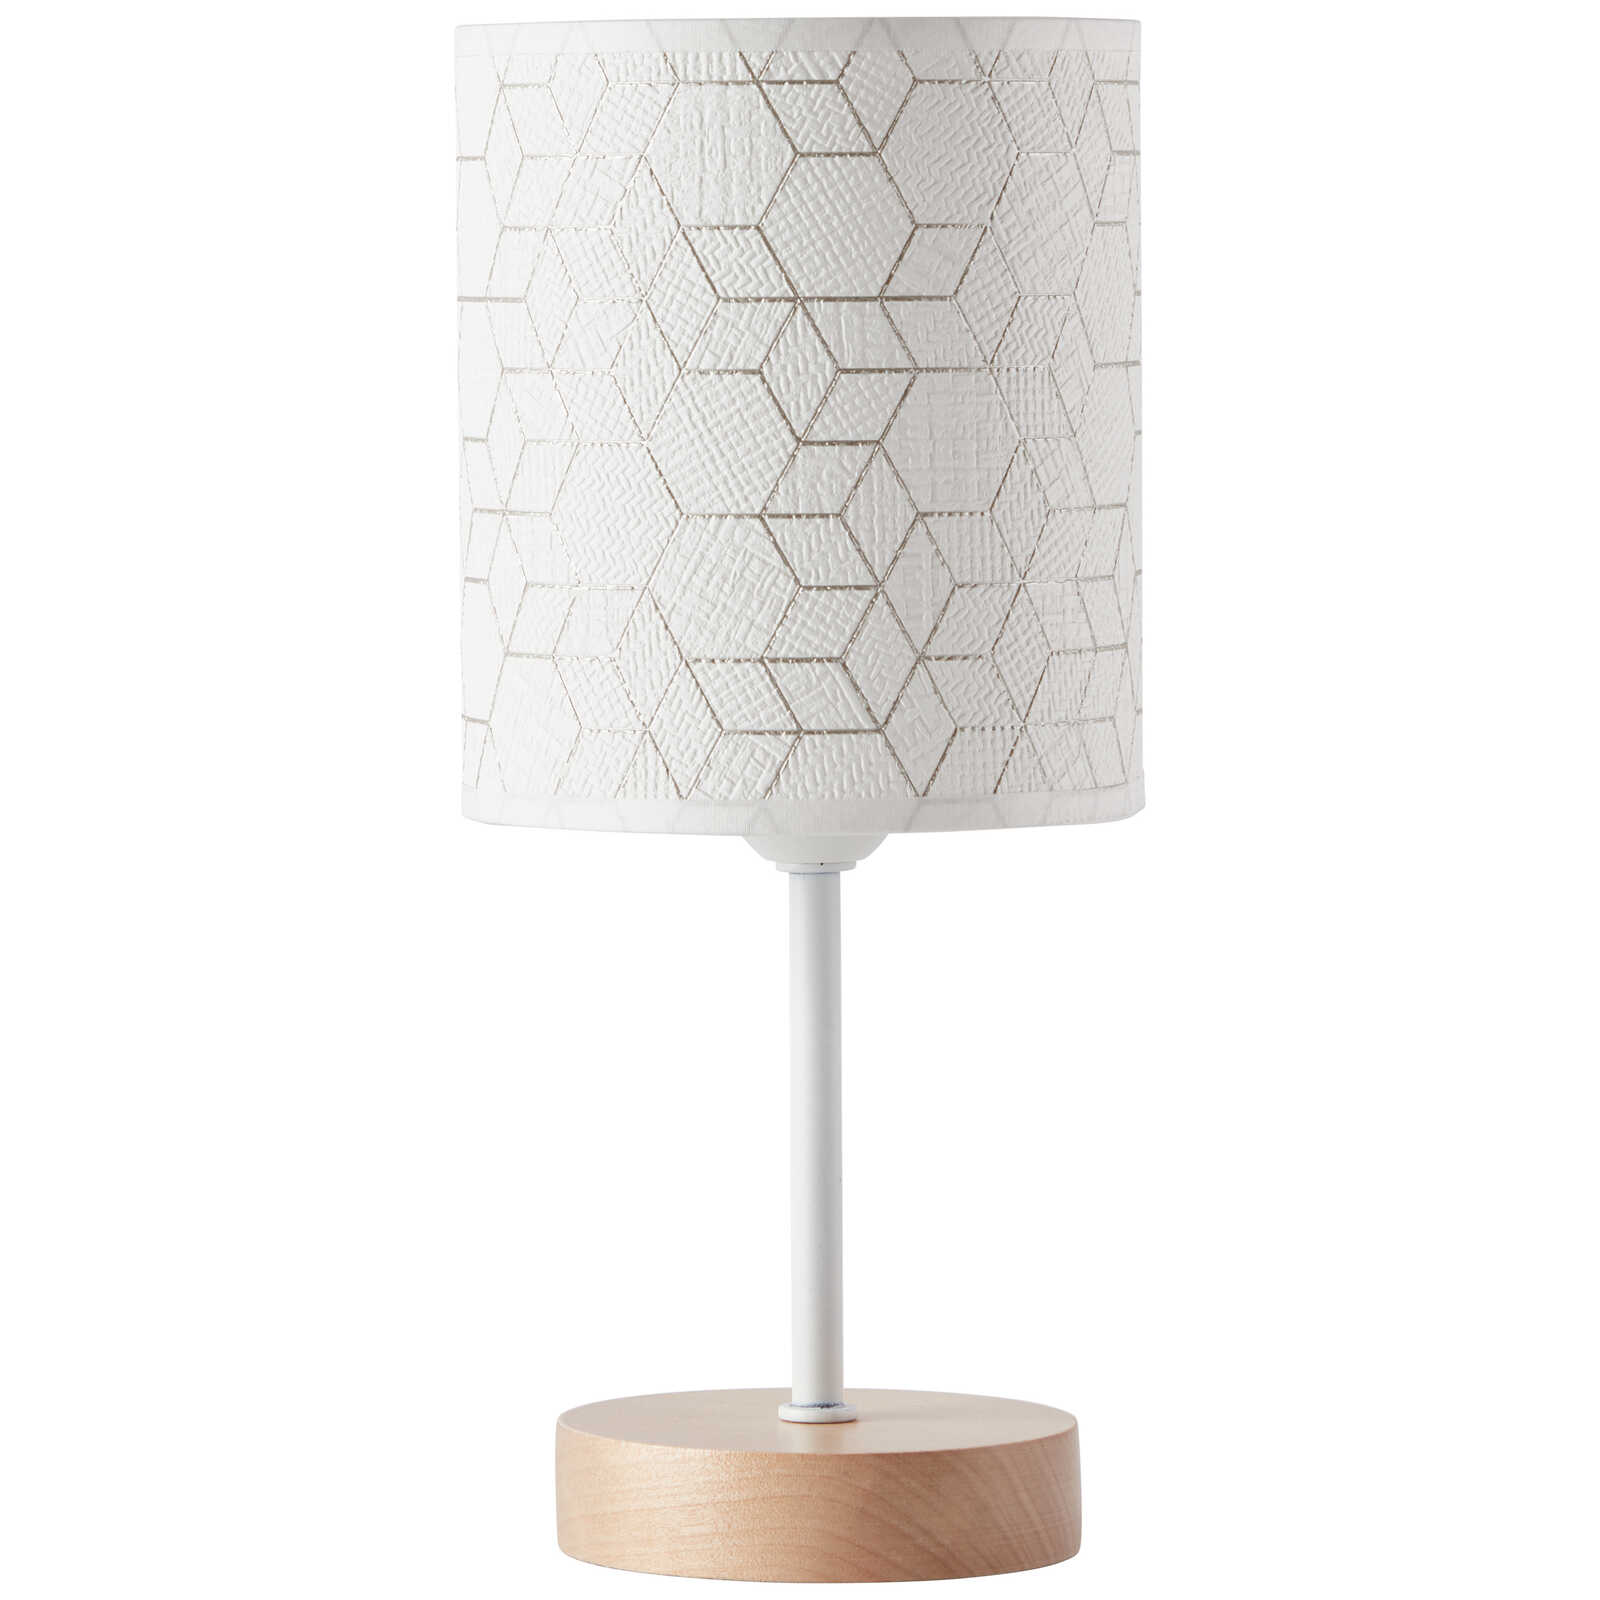             Textile table lamp - Hannes 4 - Brown
        